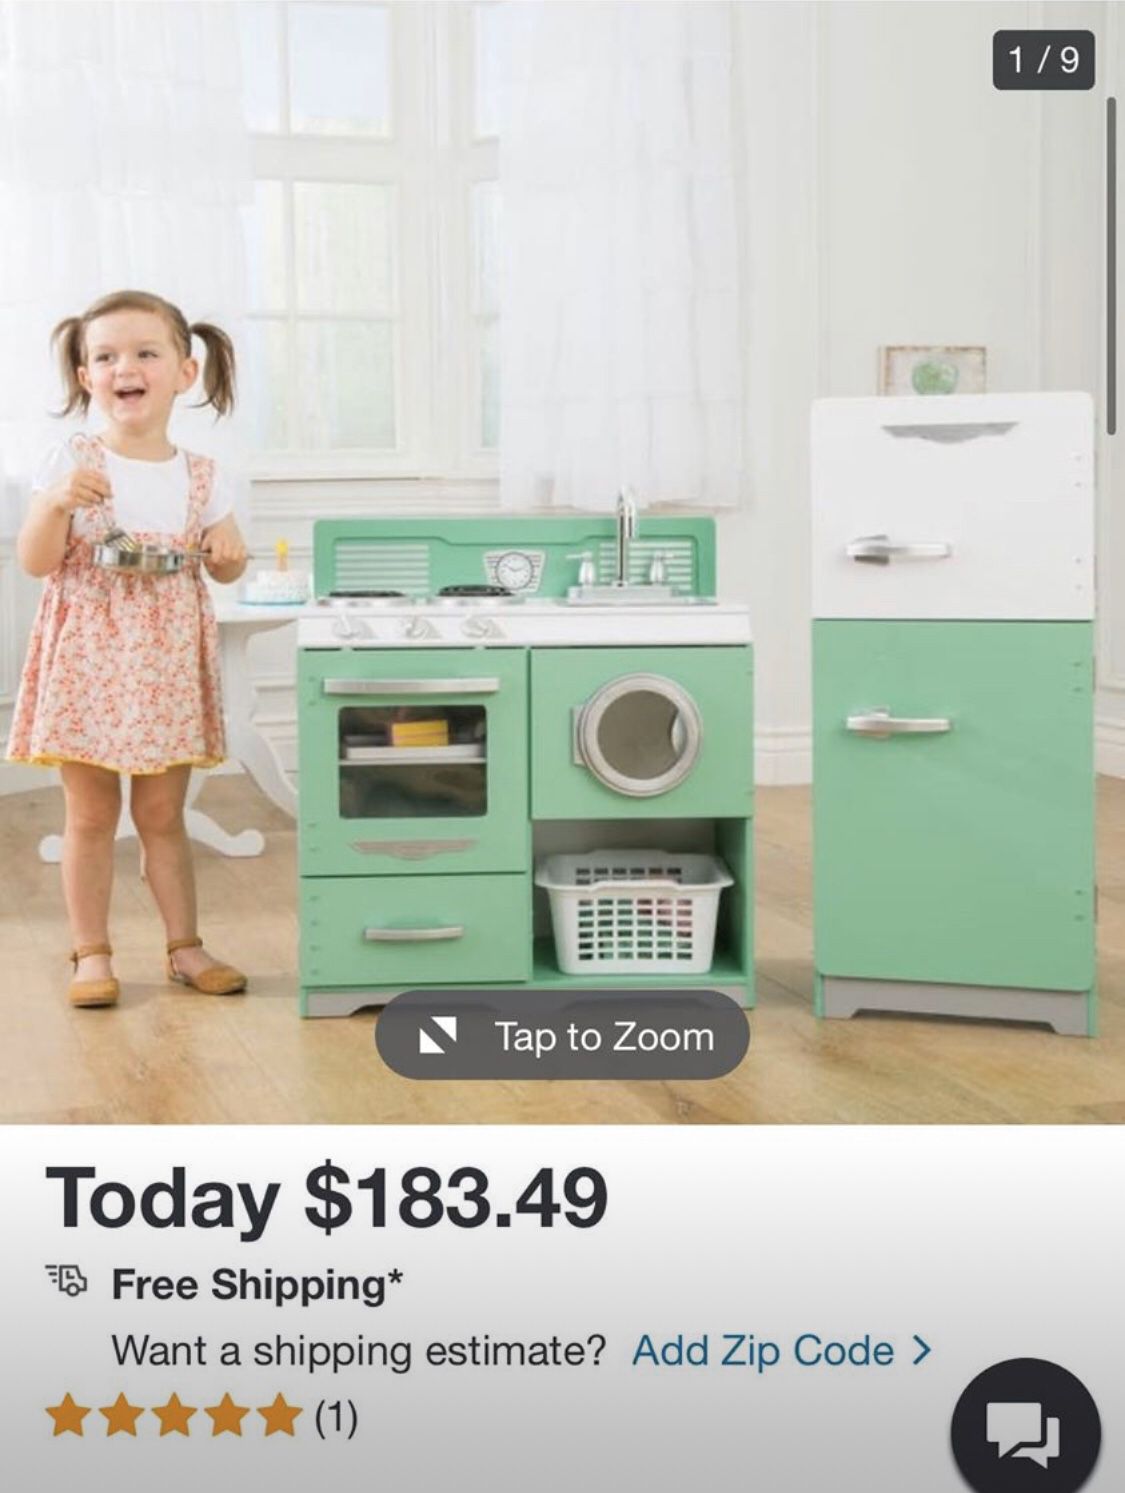 Big kitchen set for kids brand new pack in box orignal price around 200$ at target